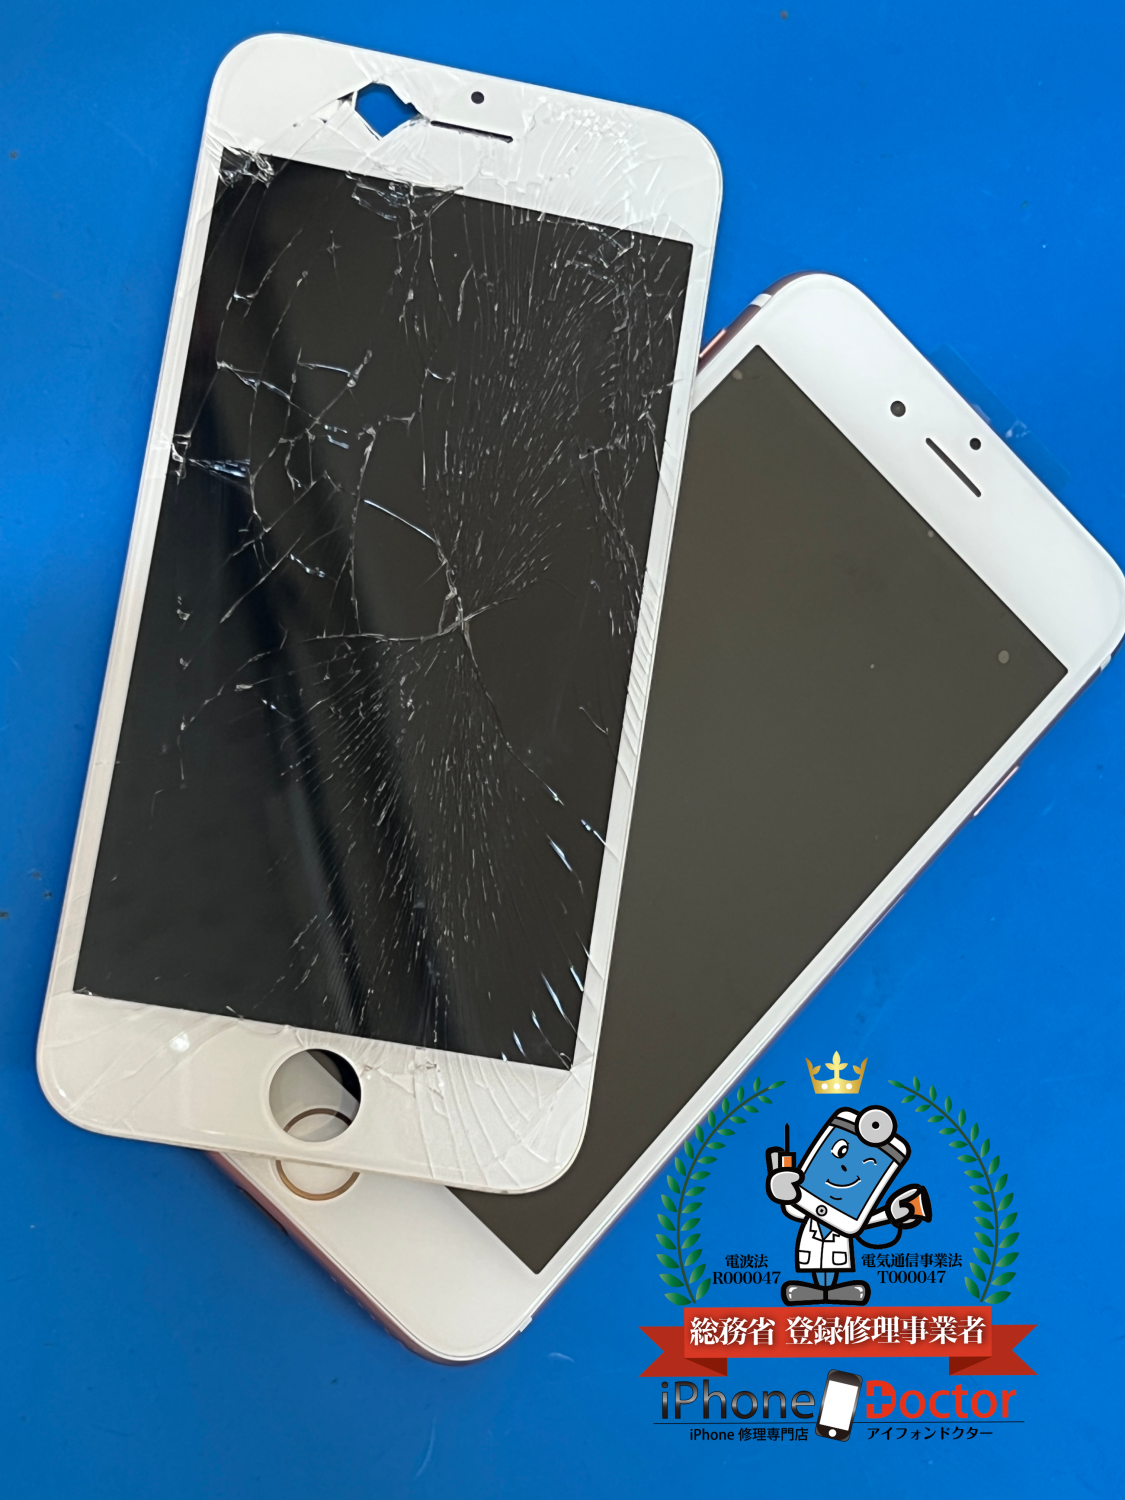 iPhone8ガラス割れ、液晶破損